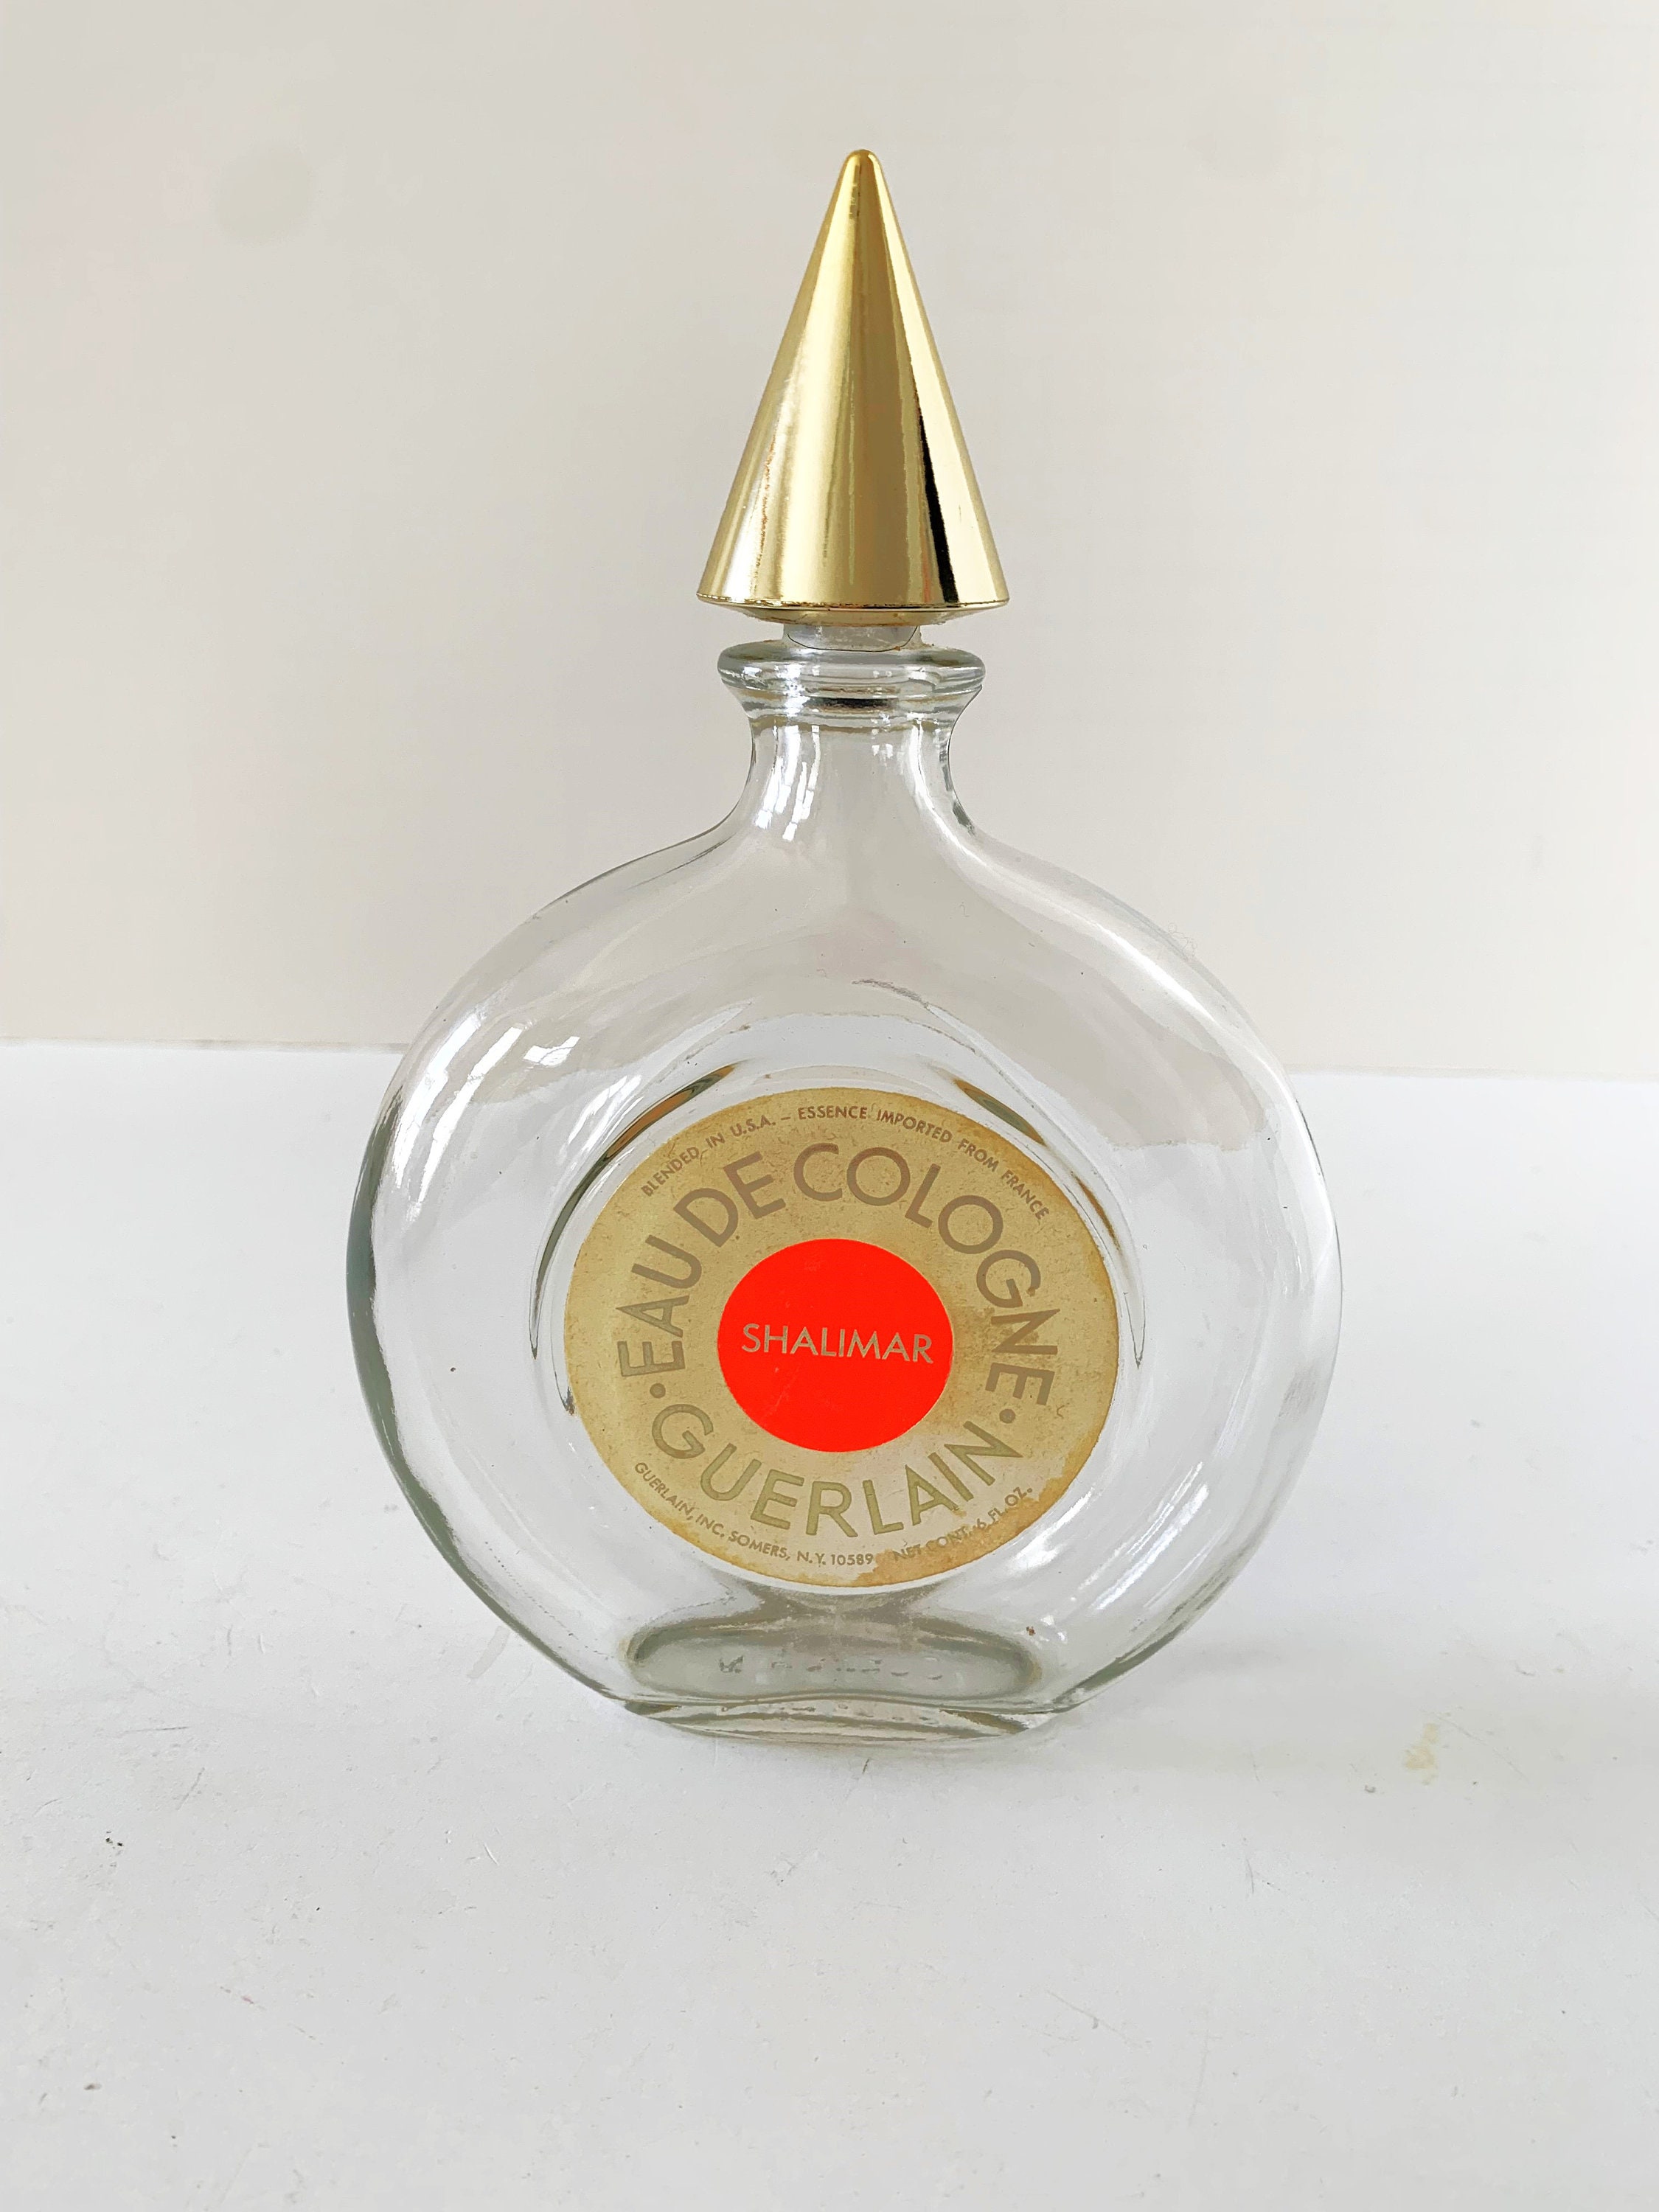 Mitsouko Eau de Toilette Guerlain perfume - a fragrance for women 1919